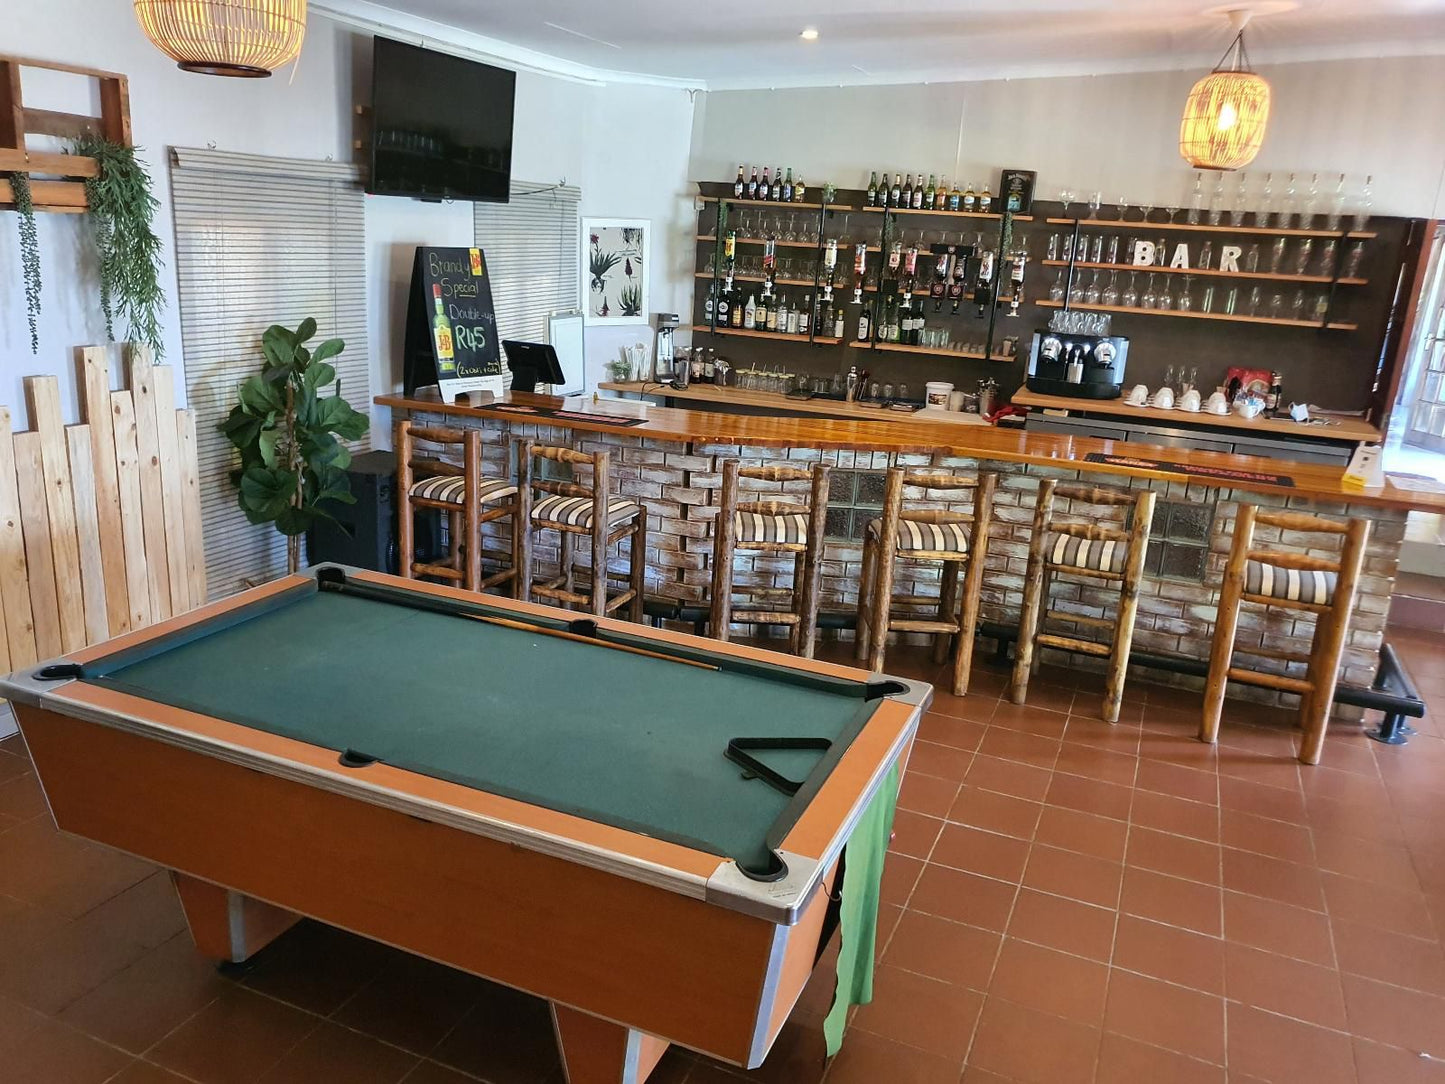 Nabana Lodge Hazyview Mpumalanga South Africa Restaurant, Bar, Billiards, Sport